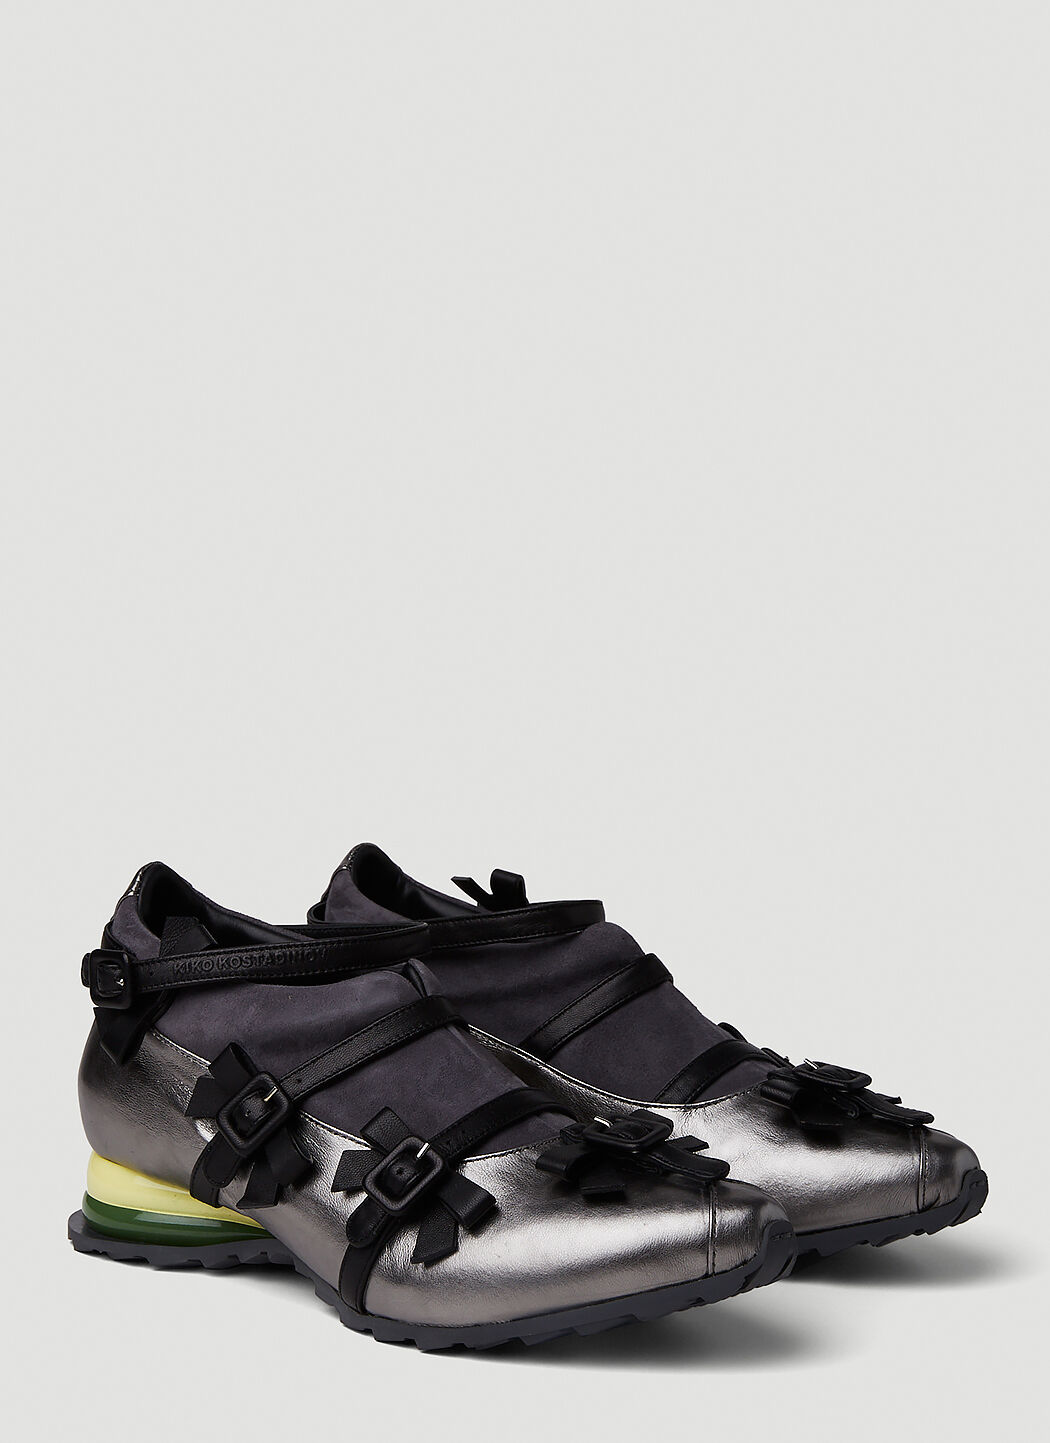 Kiko Kostadinov Hybrid Mary Jane Sneakers | LN-CC